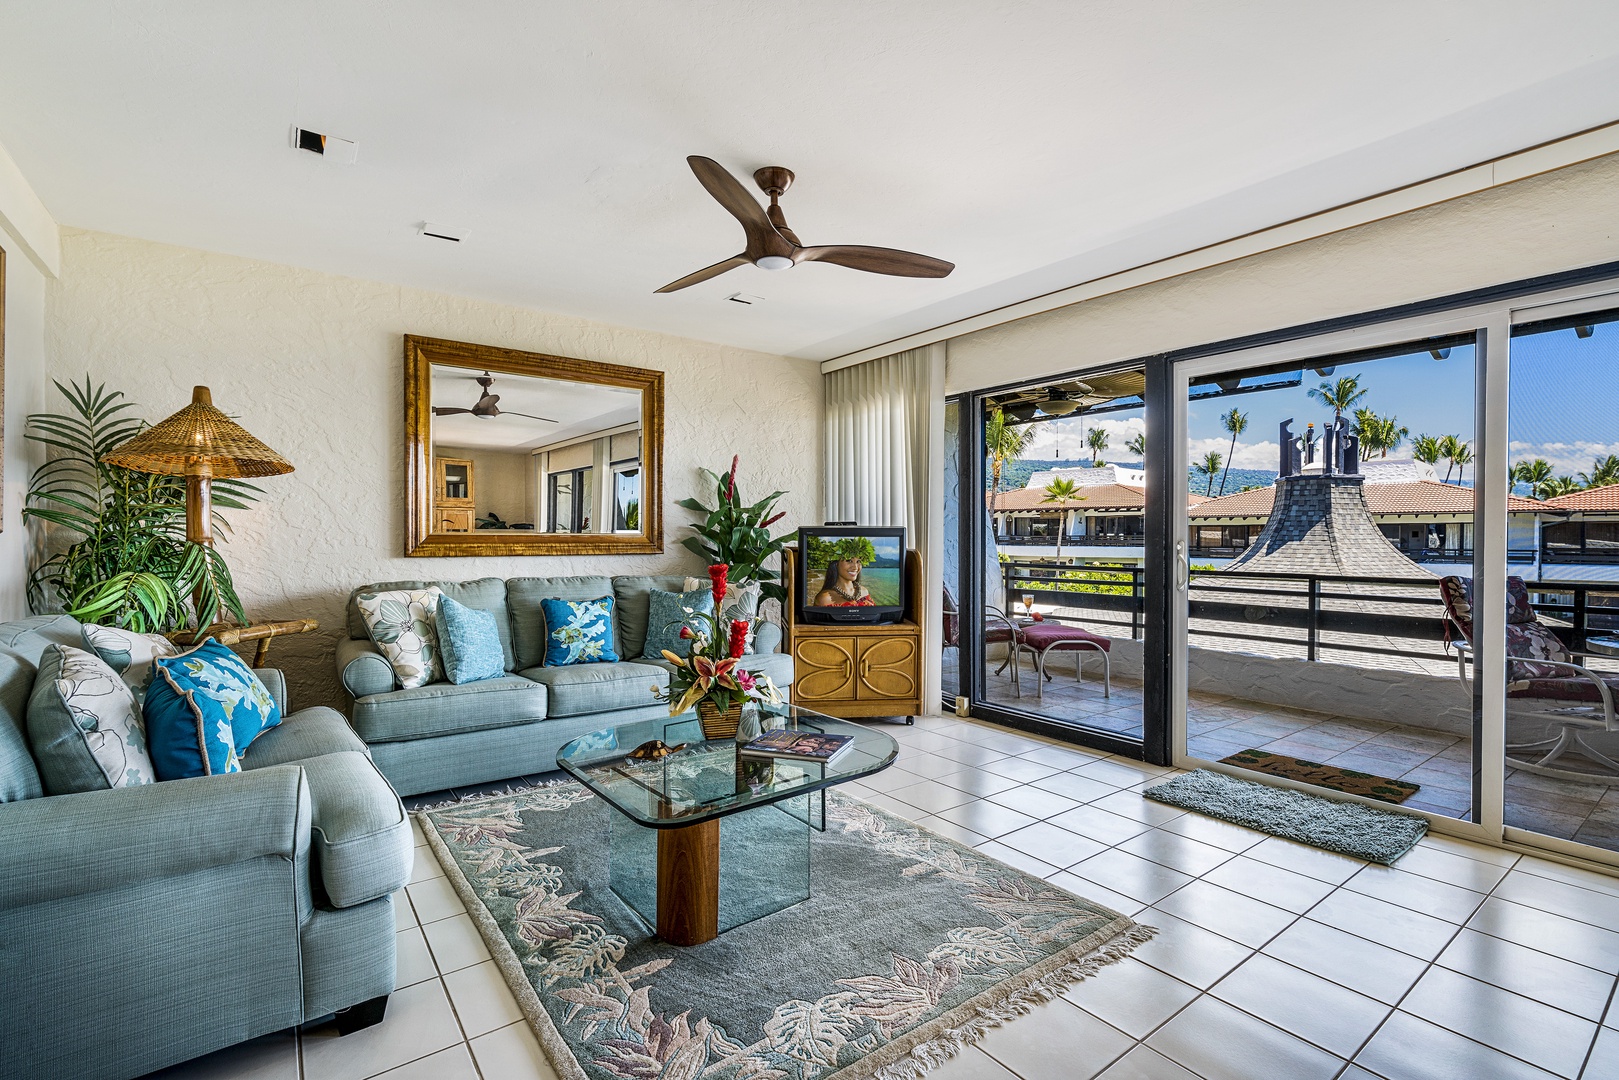 Kailua Kona Vacation Rentals, Casa De Emdeko 336 - Tropically appointed living room with QUEEN SLEEPER SOFA!